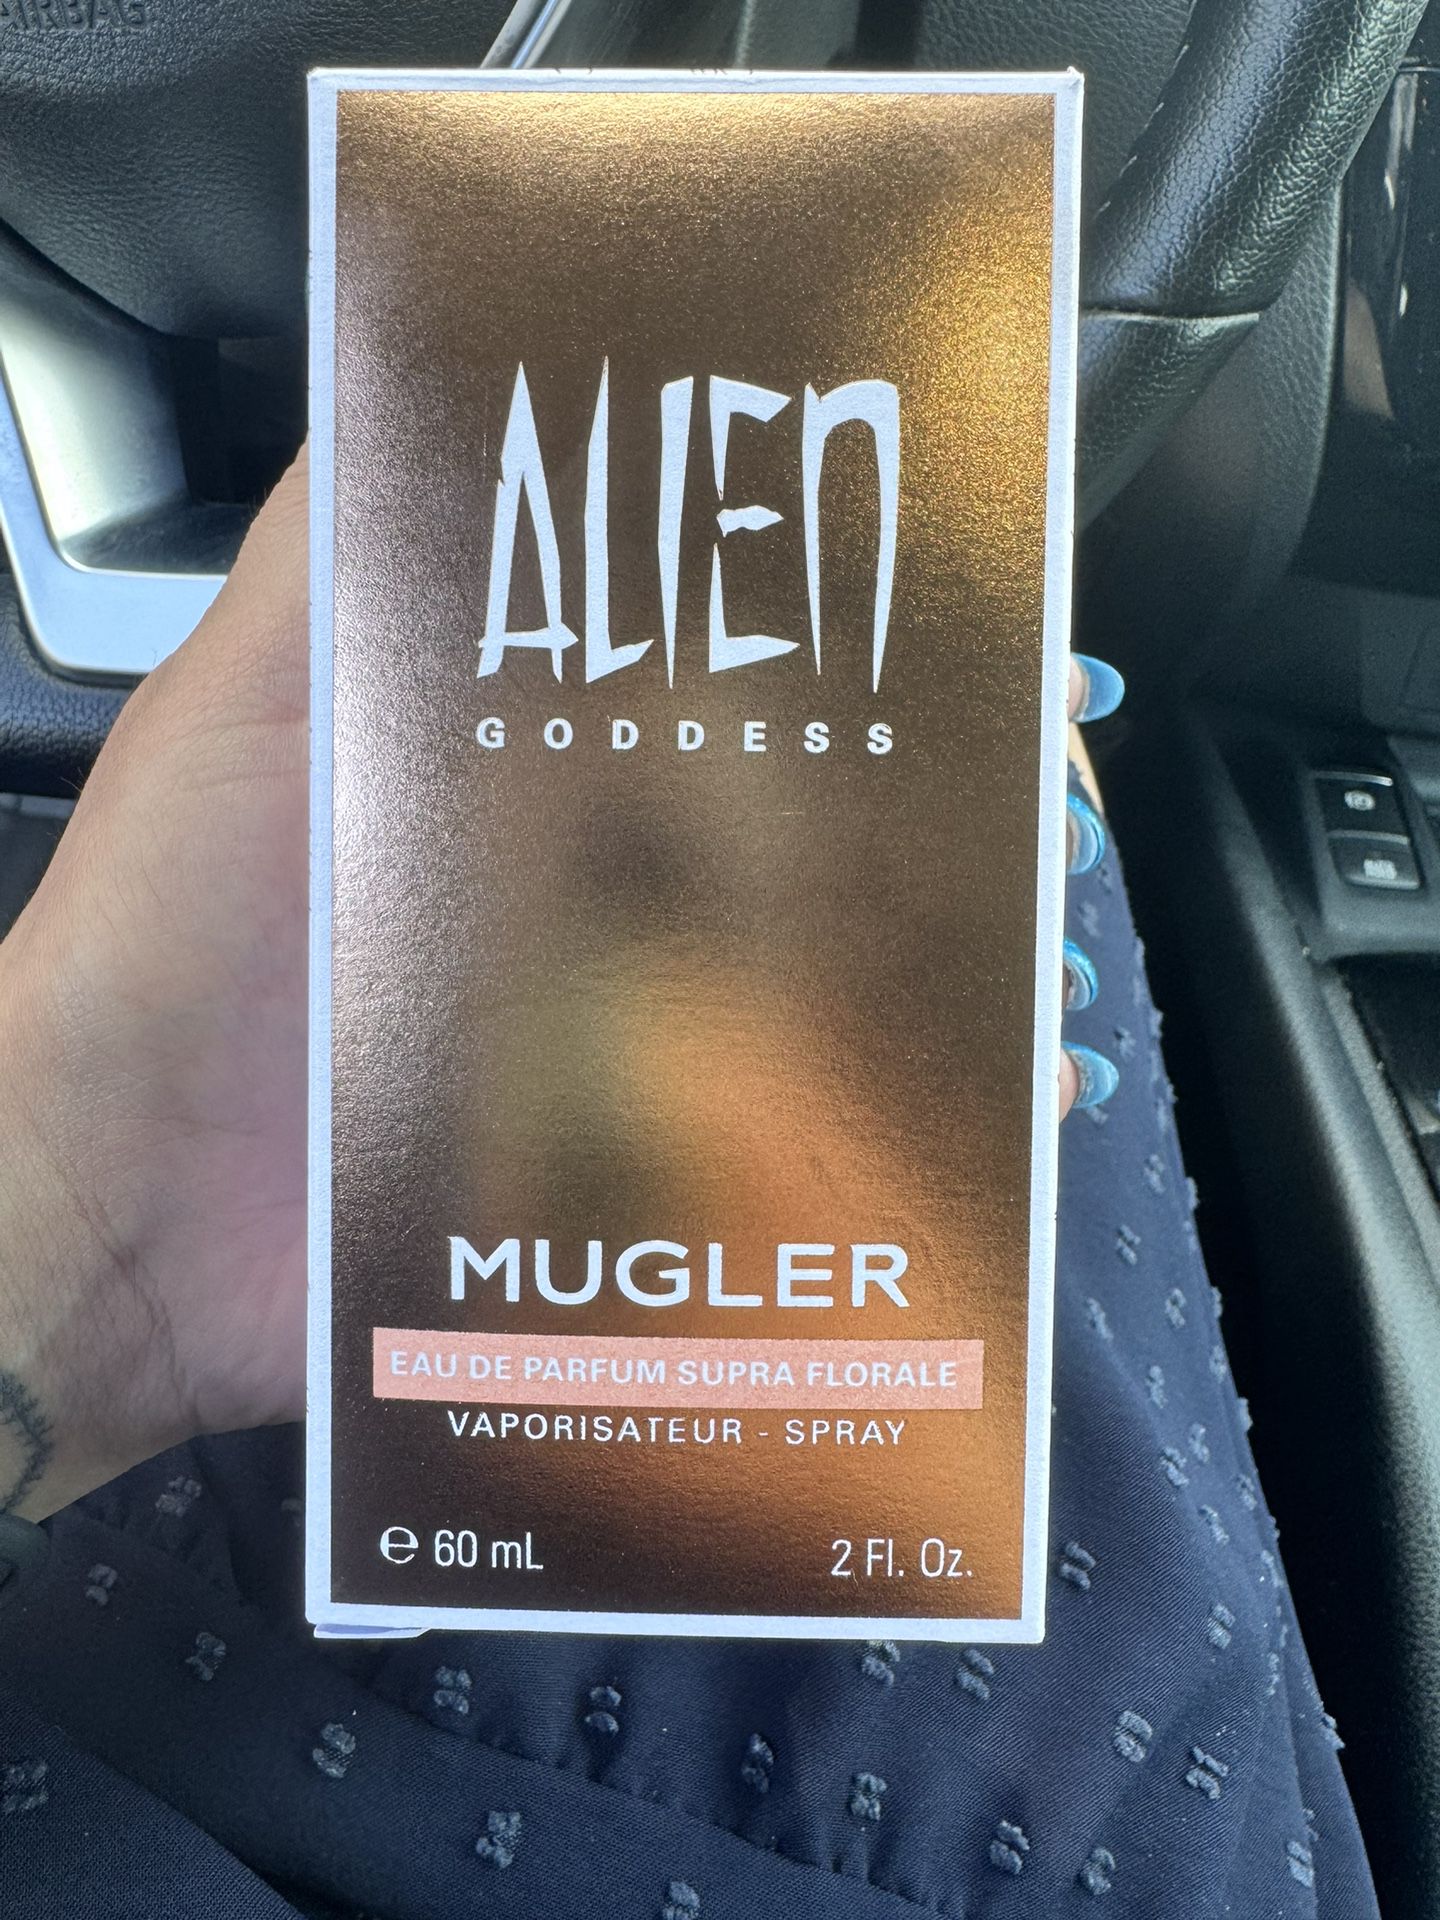 Mugler Perfume